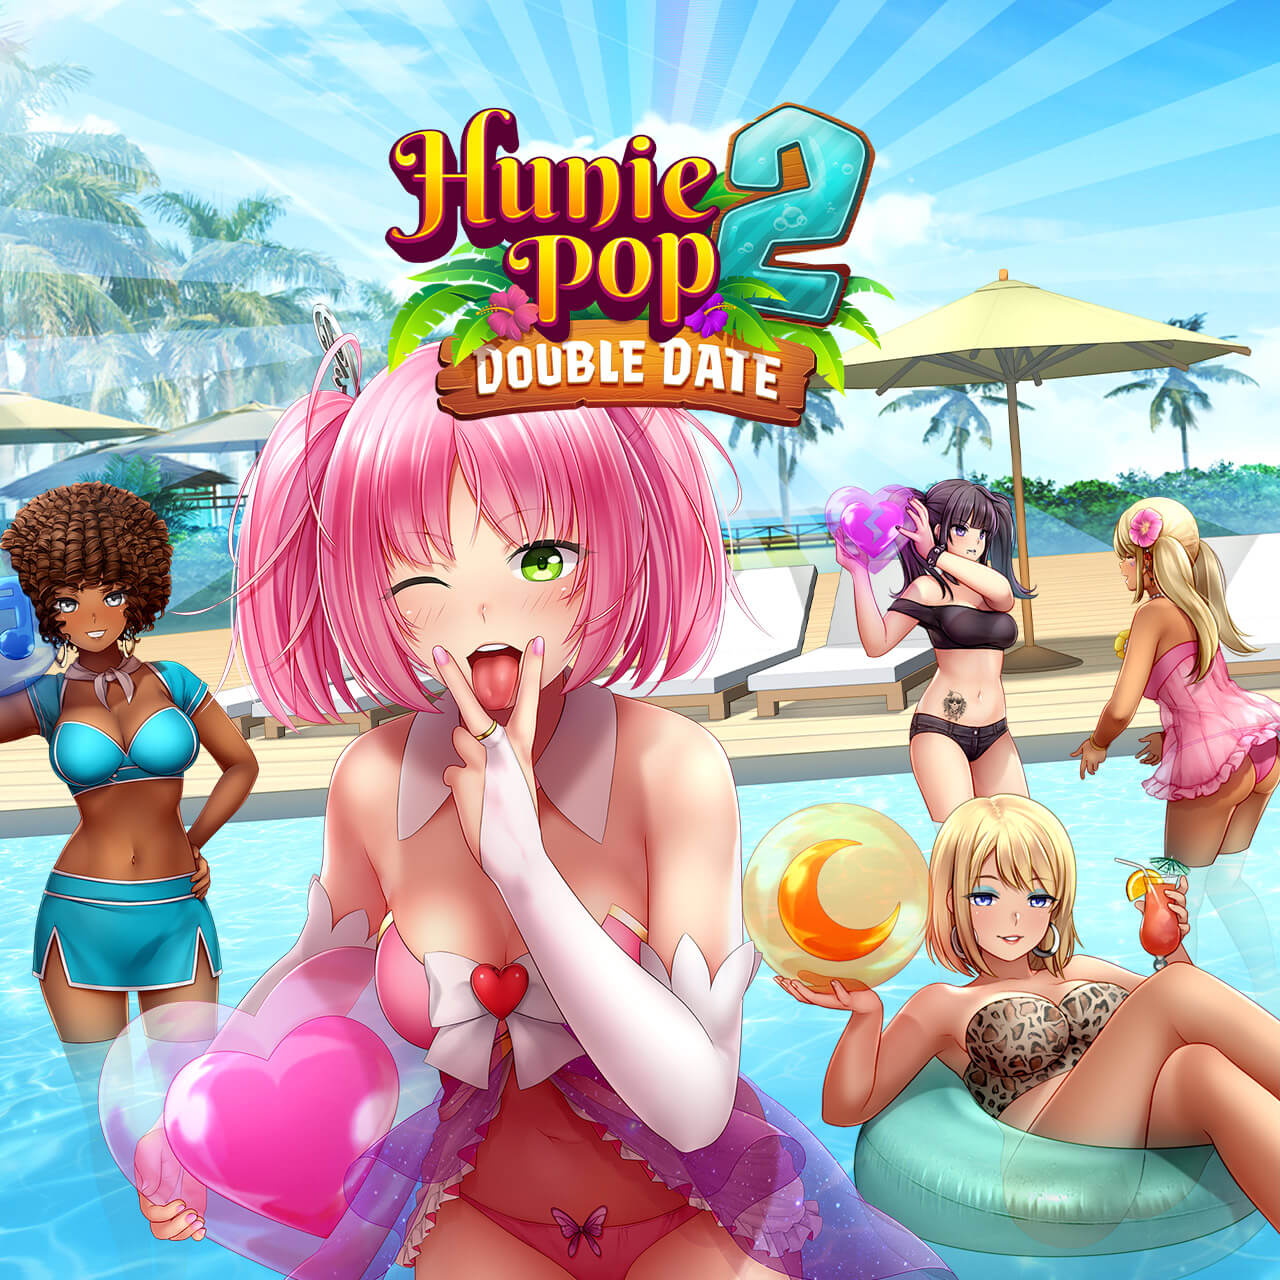 Huniepop Anime Porn - HuniePop 2: Double Date - Dating Sim Sex Game | Nutaku